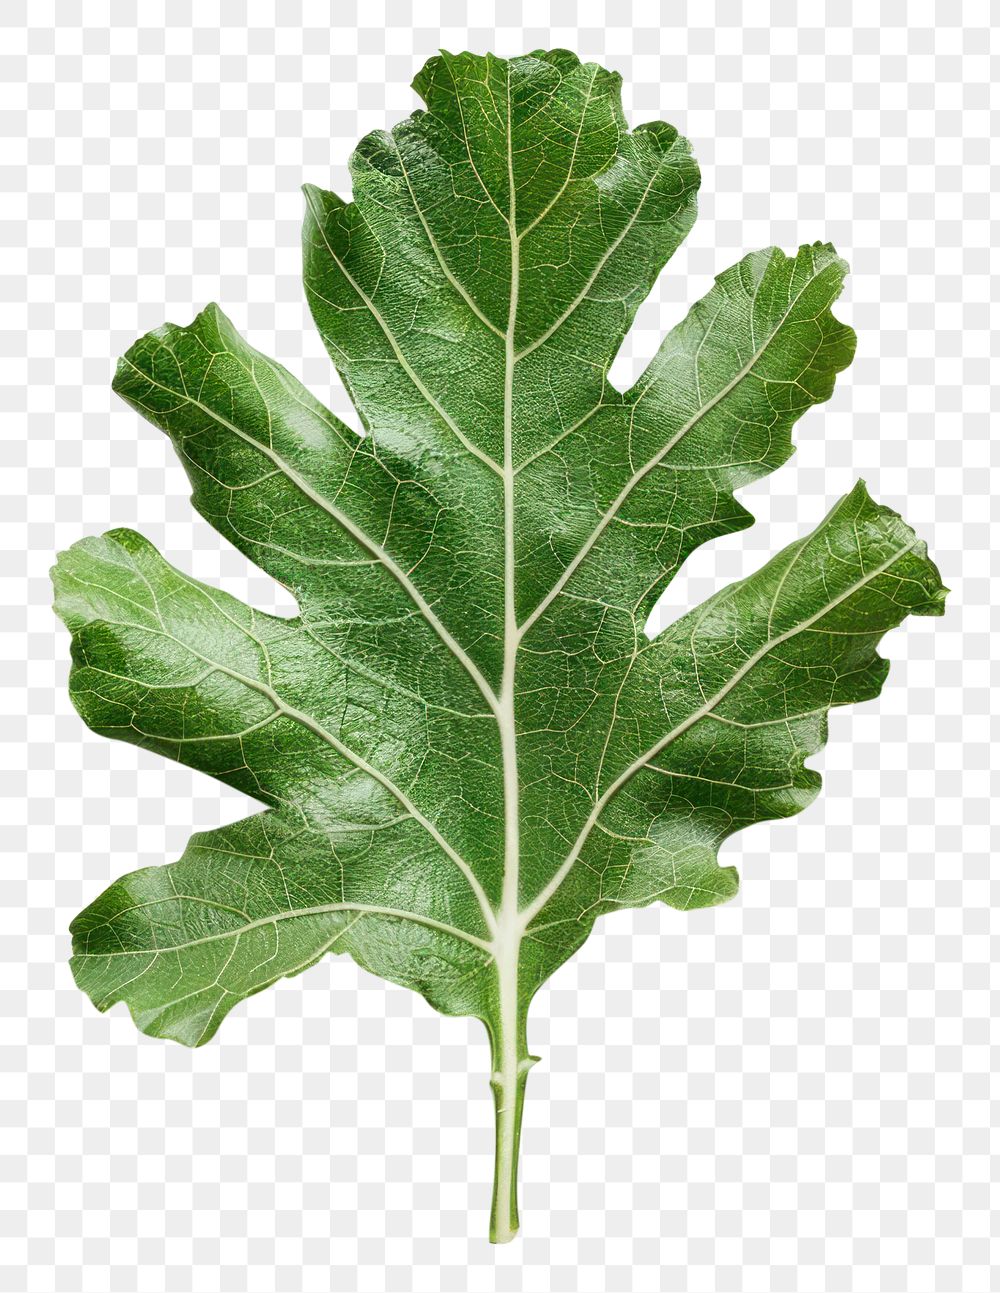 PNG Artichoke leaf vegetable arugula produce.